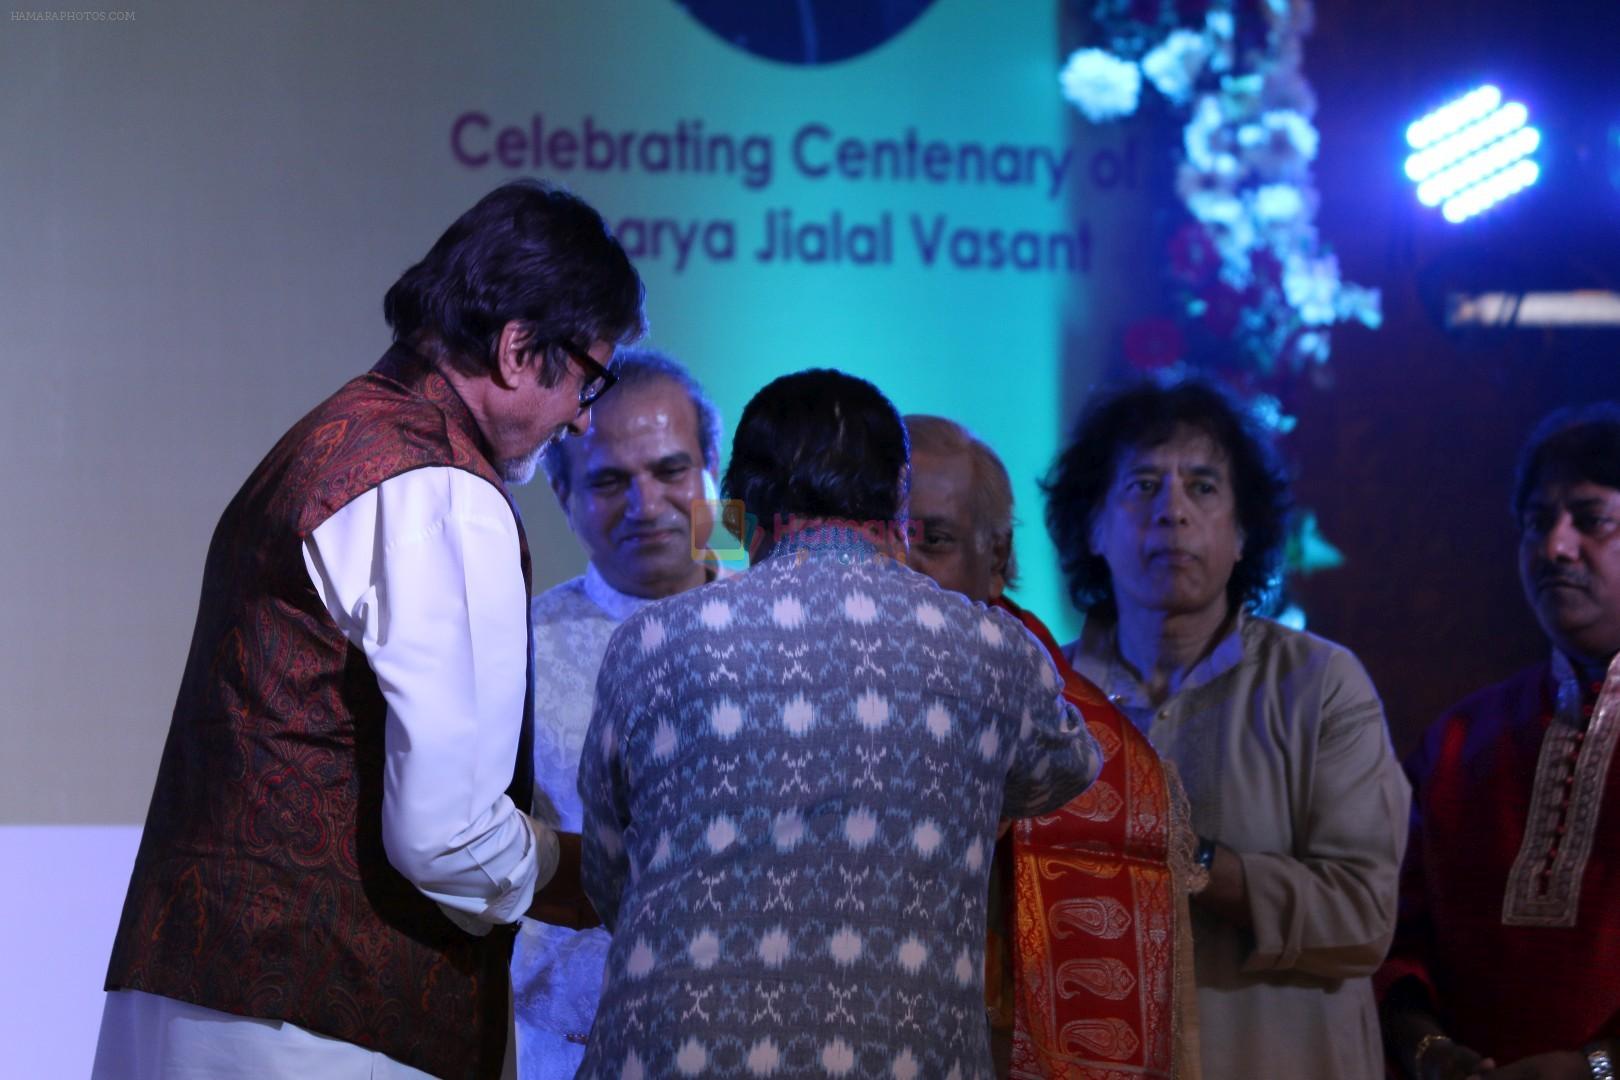 Amitabh Bachchan Attends Vasantotsav 2017 on 26th Feb 2017